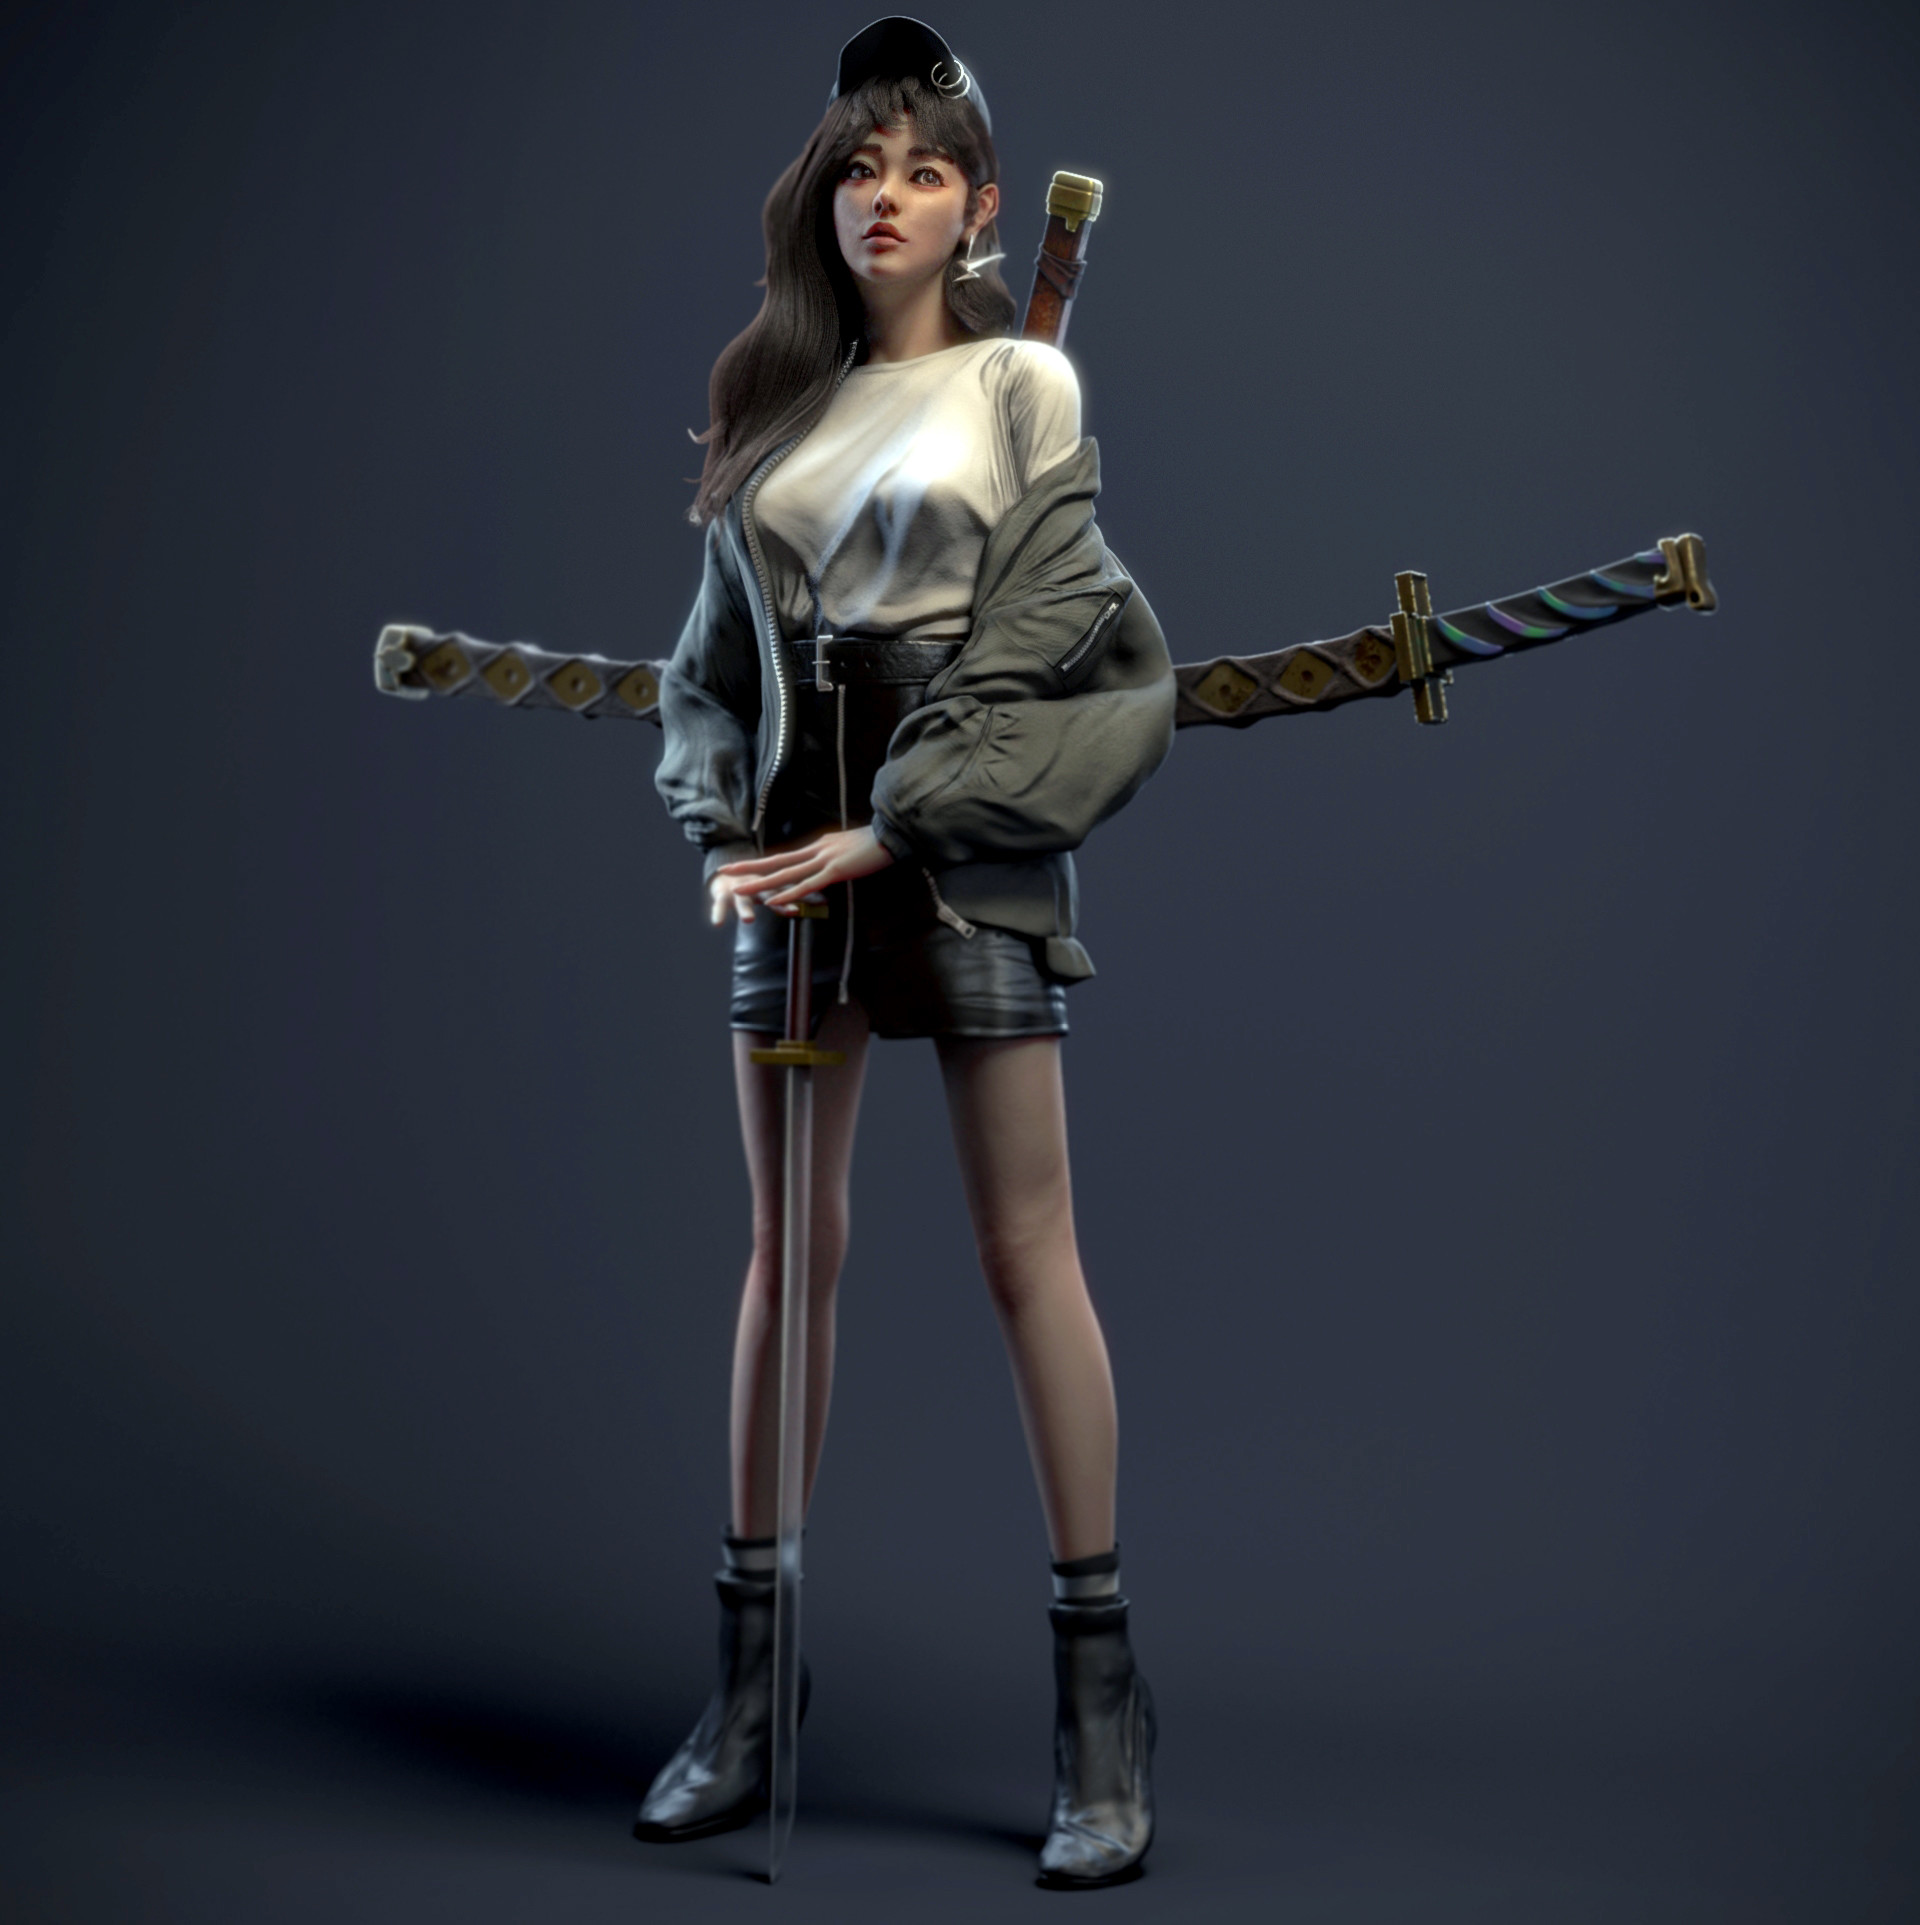 3D角色模型欣赏：3D设计师 Yihao REN 女性3d角色 作品欣赏 - 哔哩哔哩